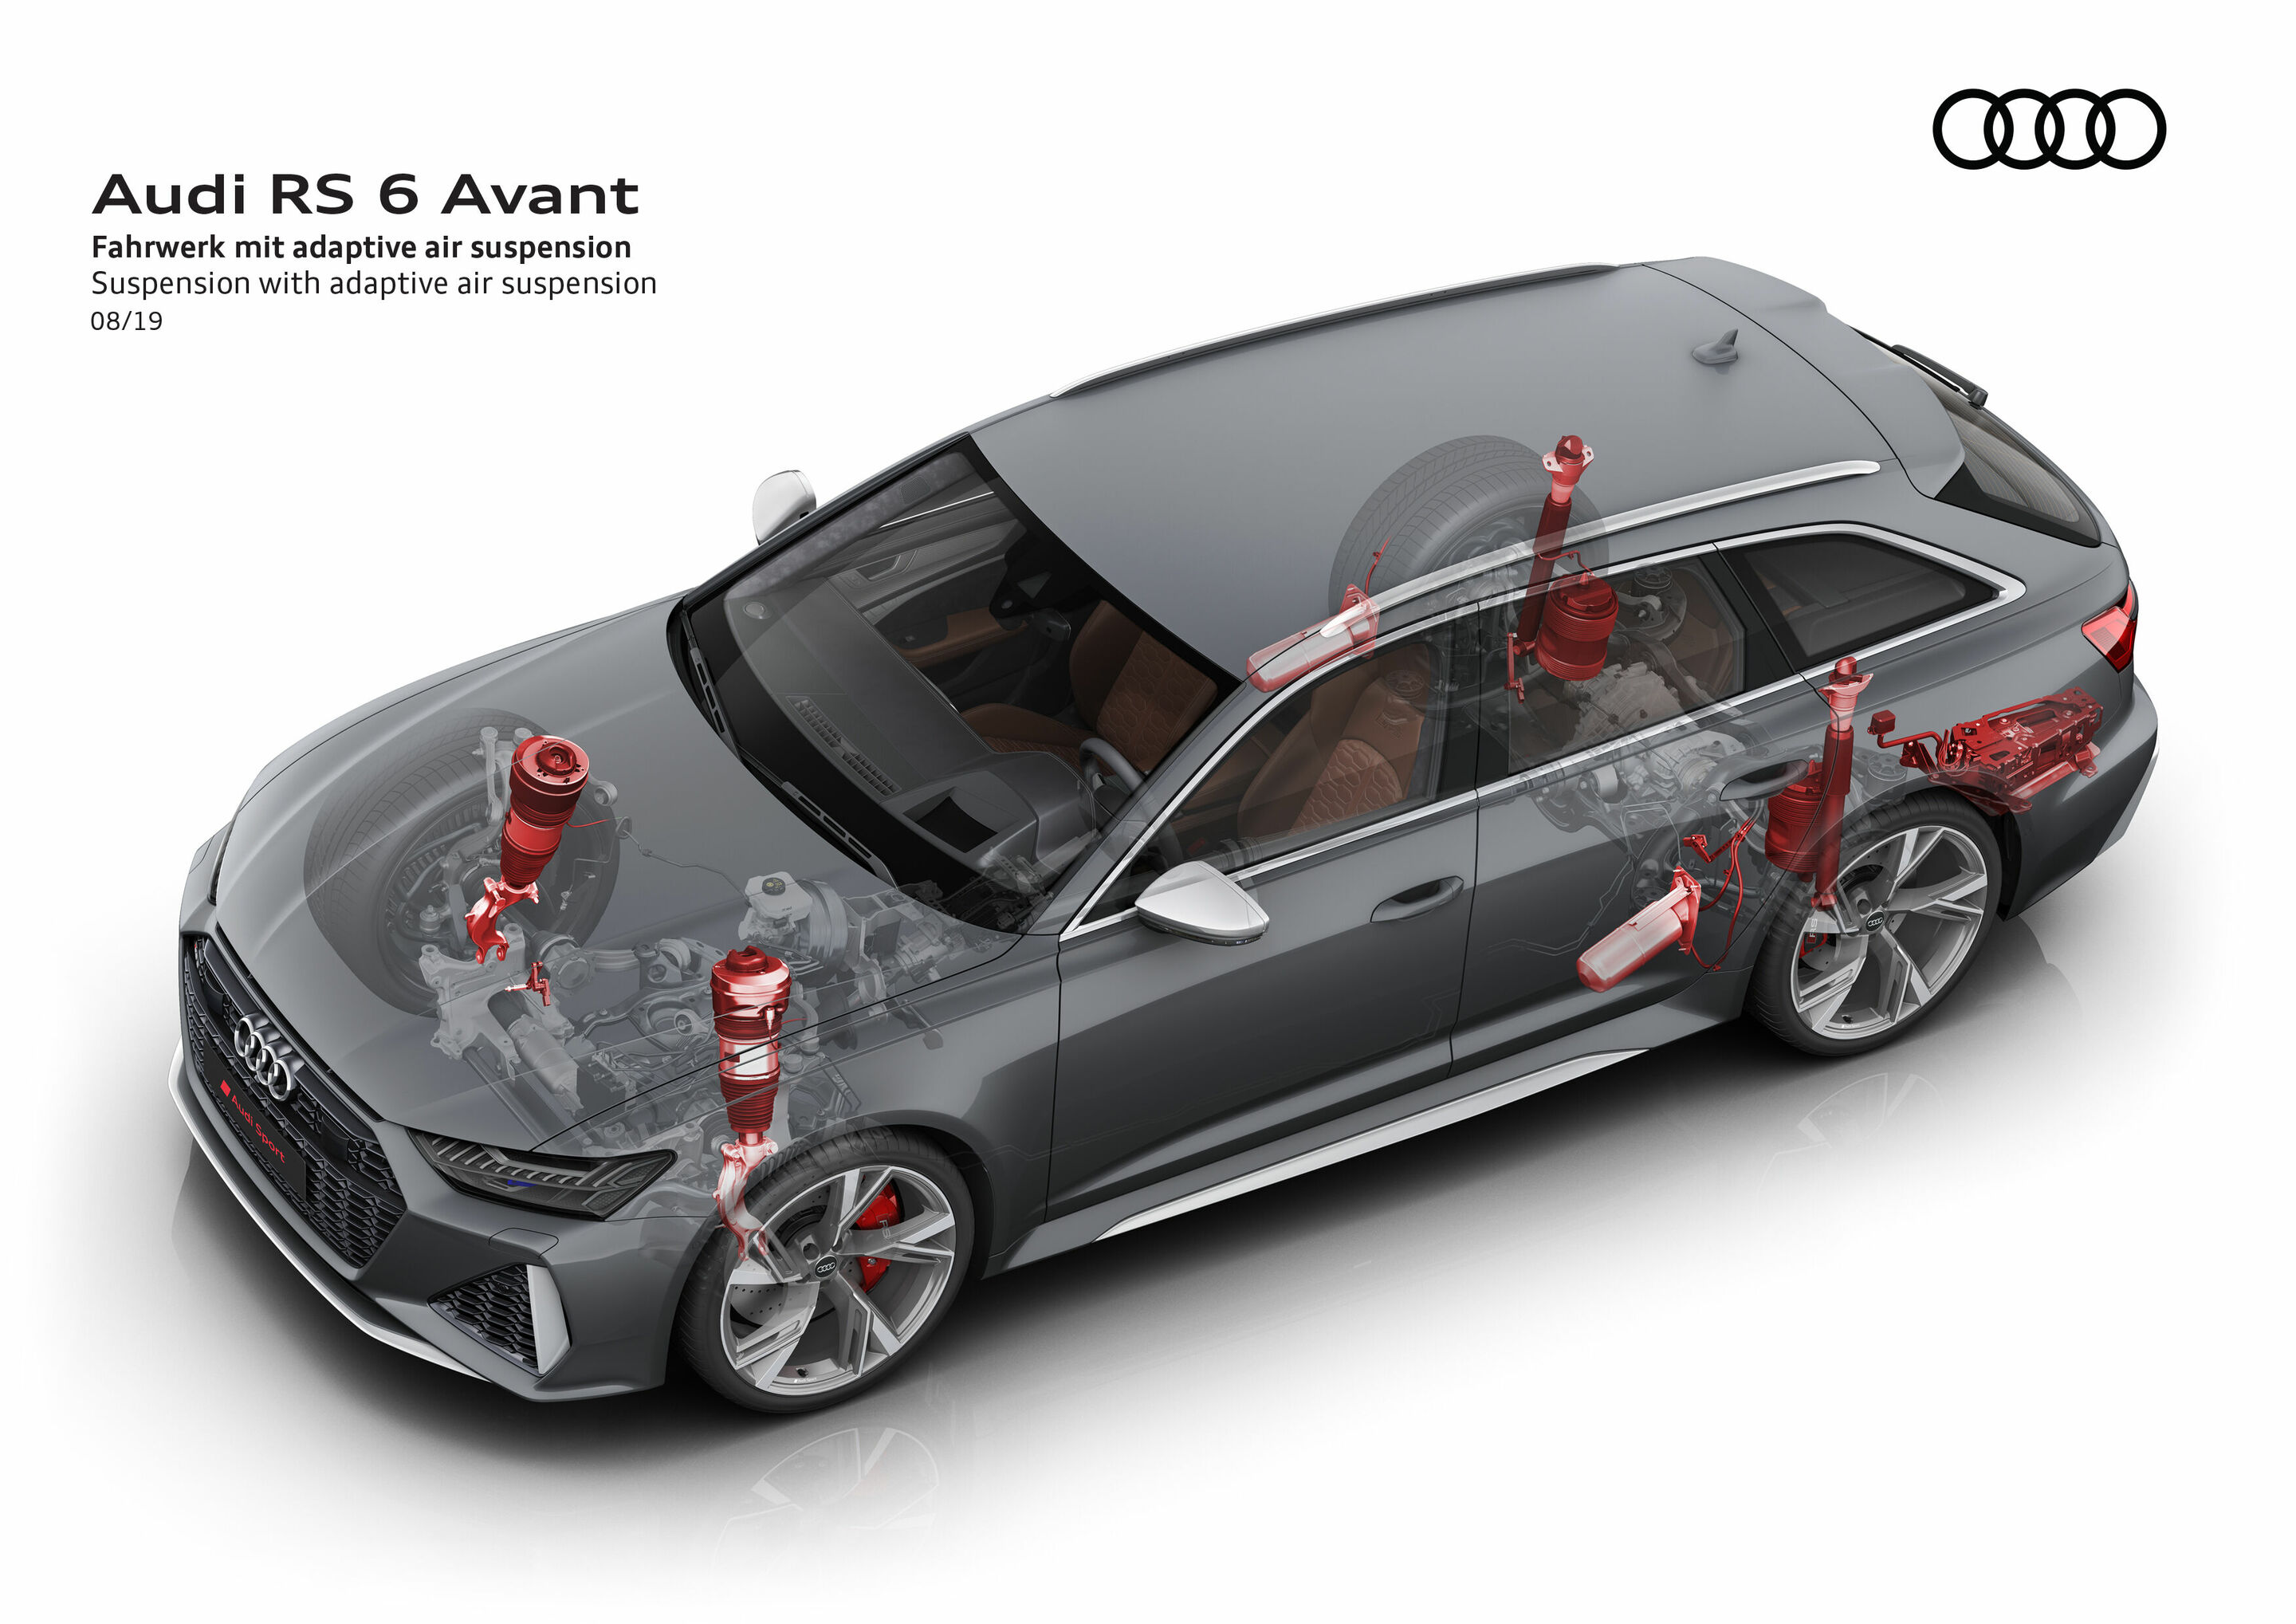 2023 Audi RS6 Avant Review: An Impressive Performance, Utility